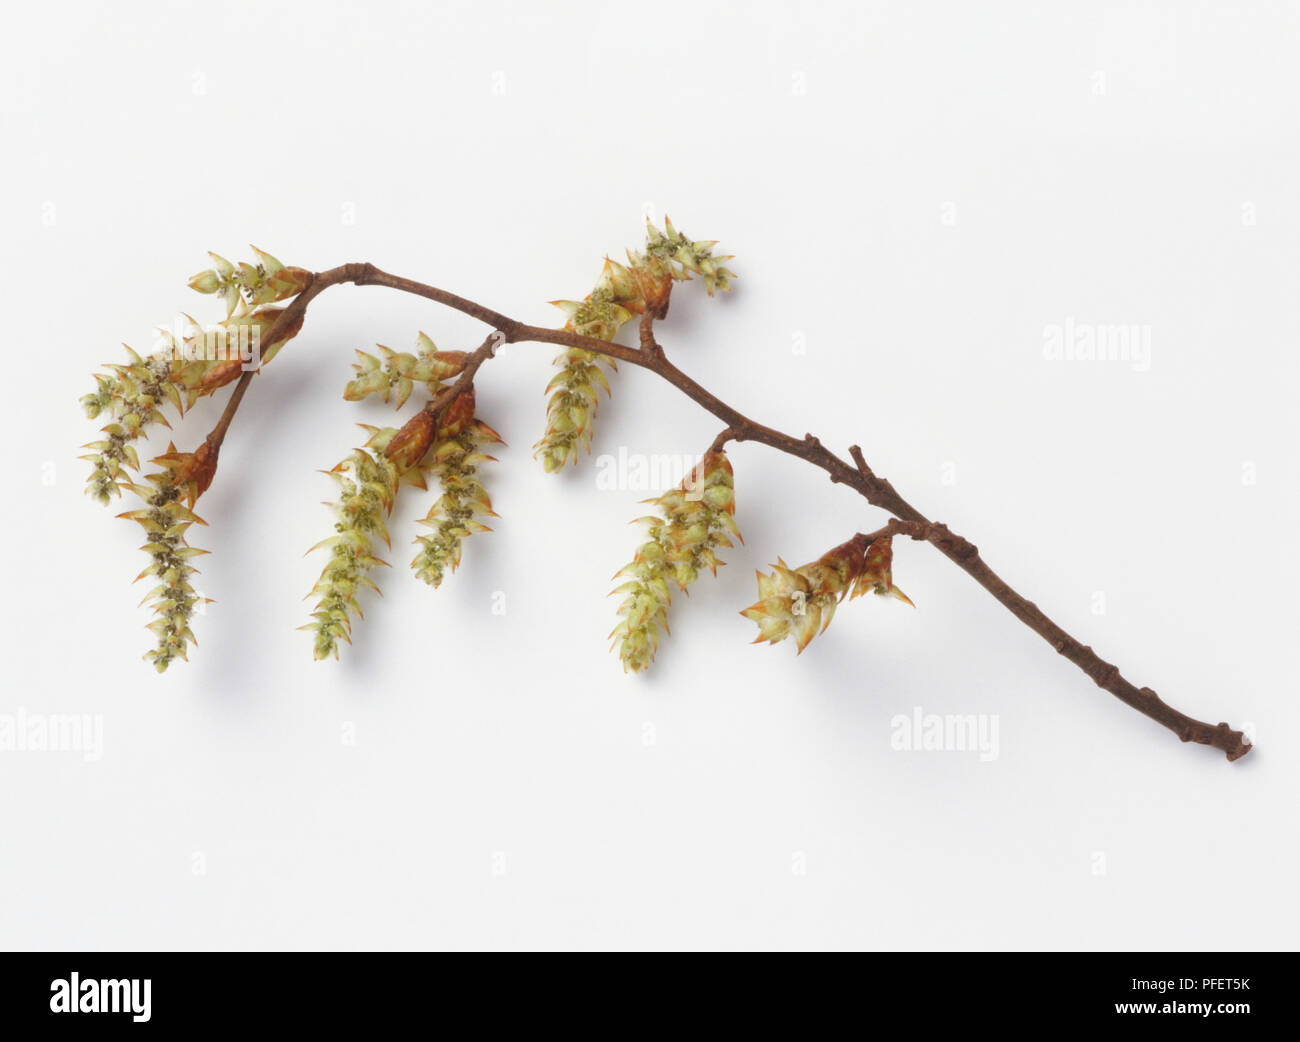 Corylus avellana, Hazel branch, side view Stock Photo